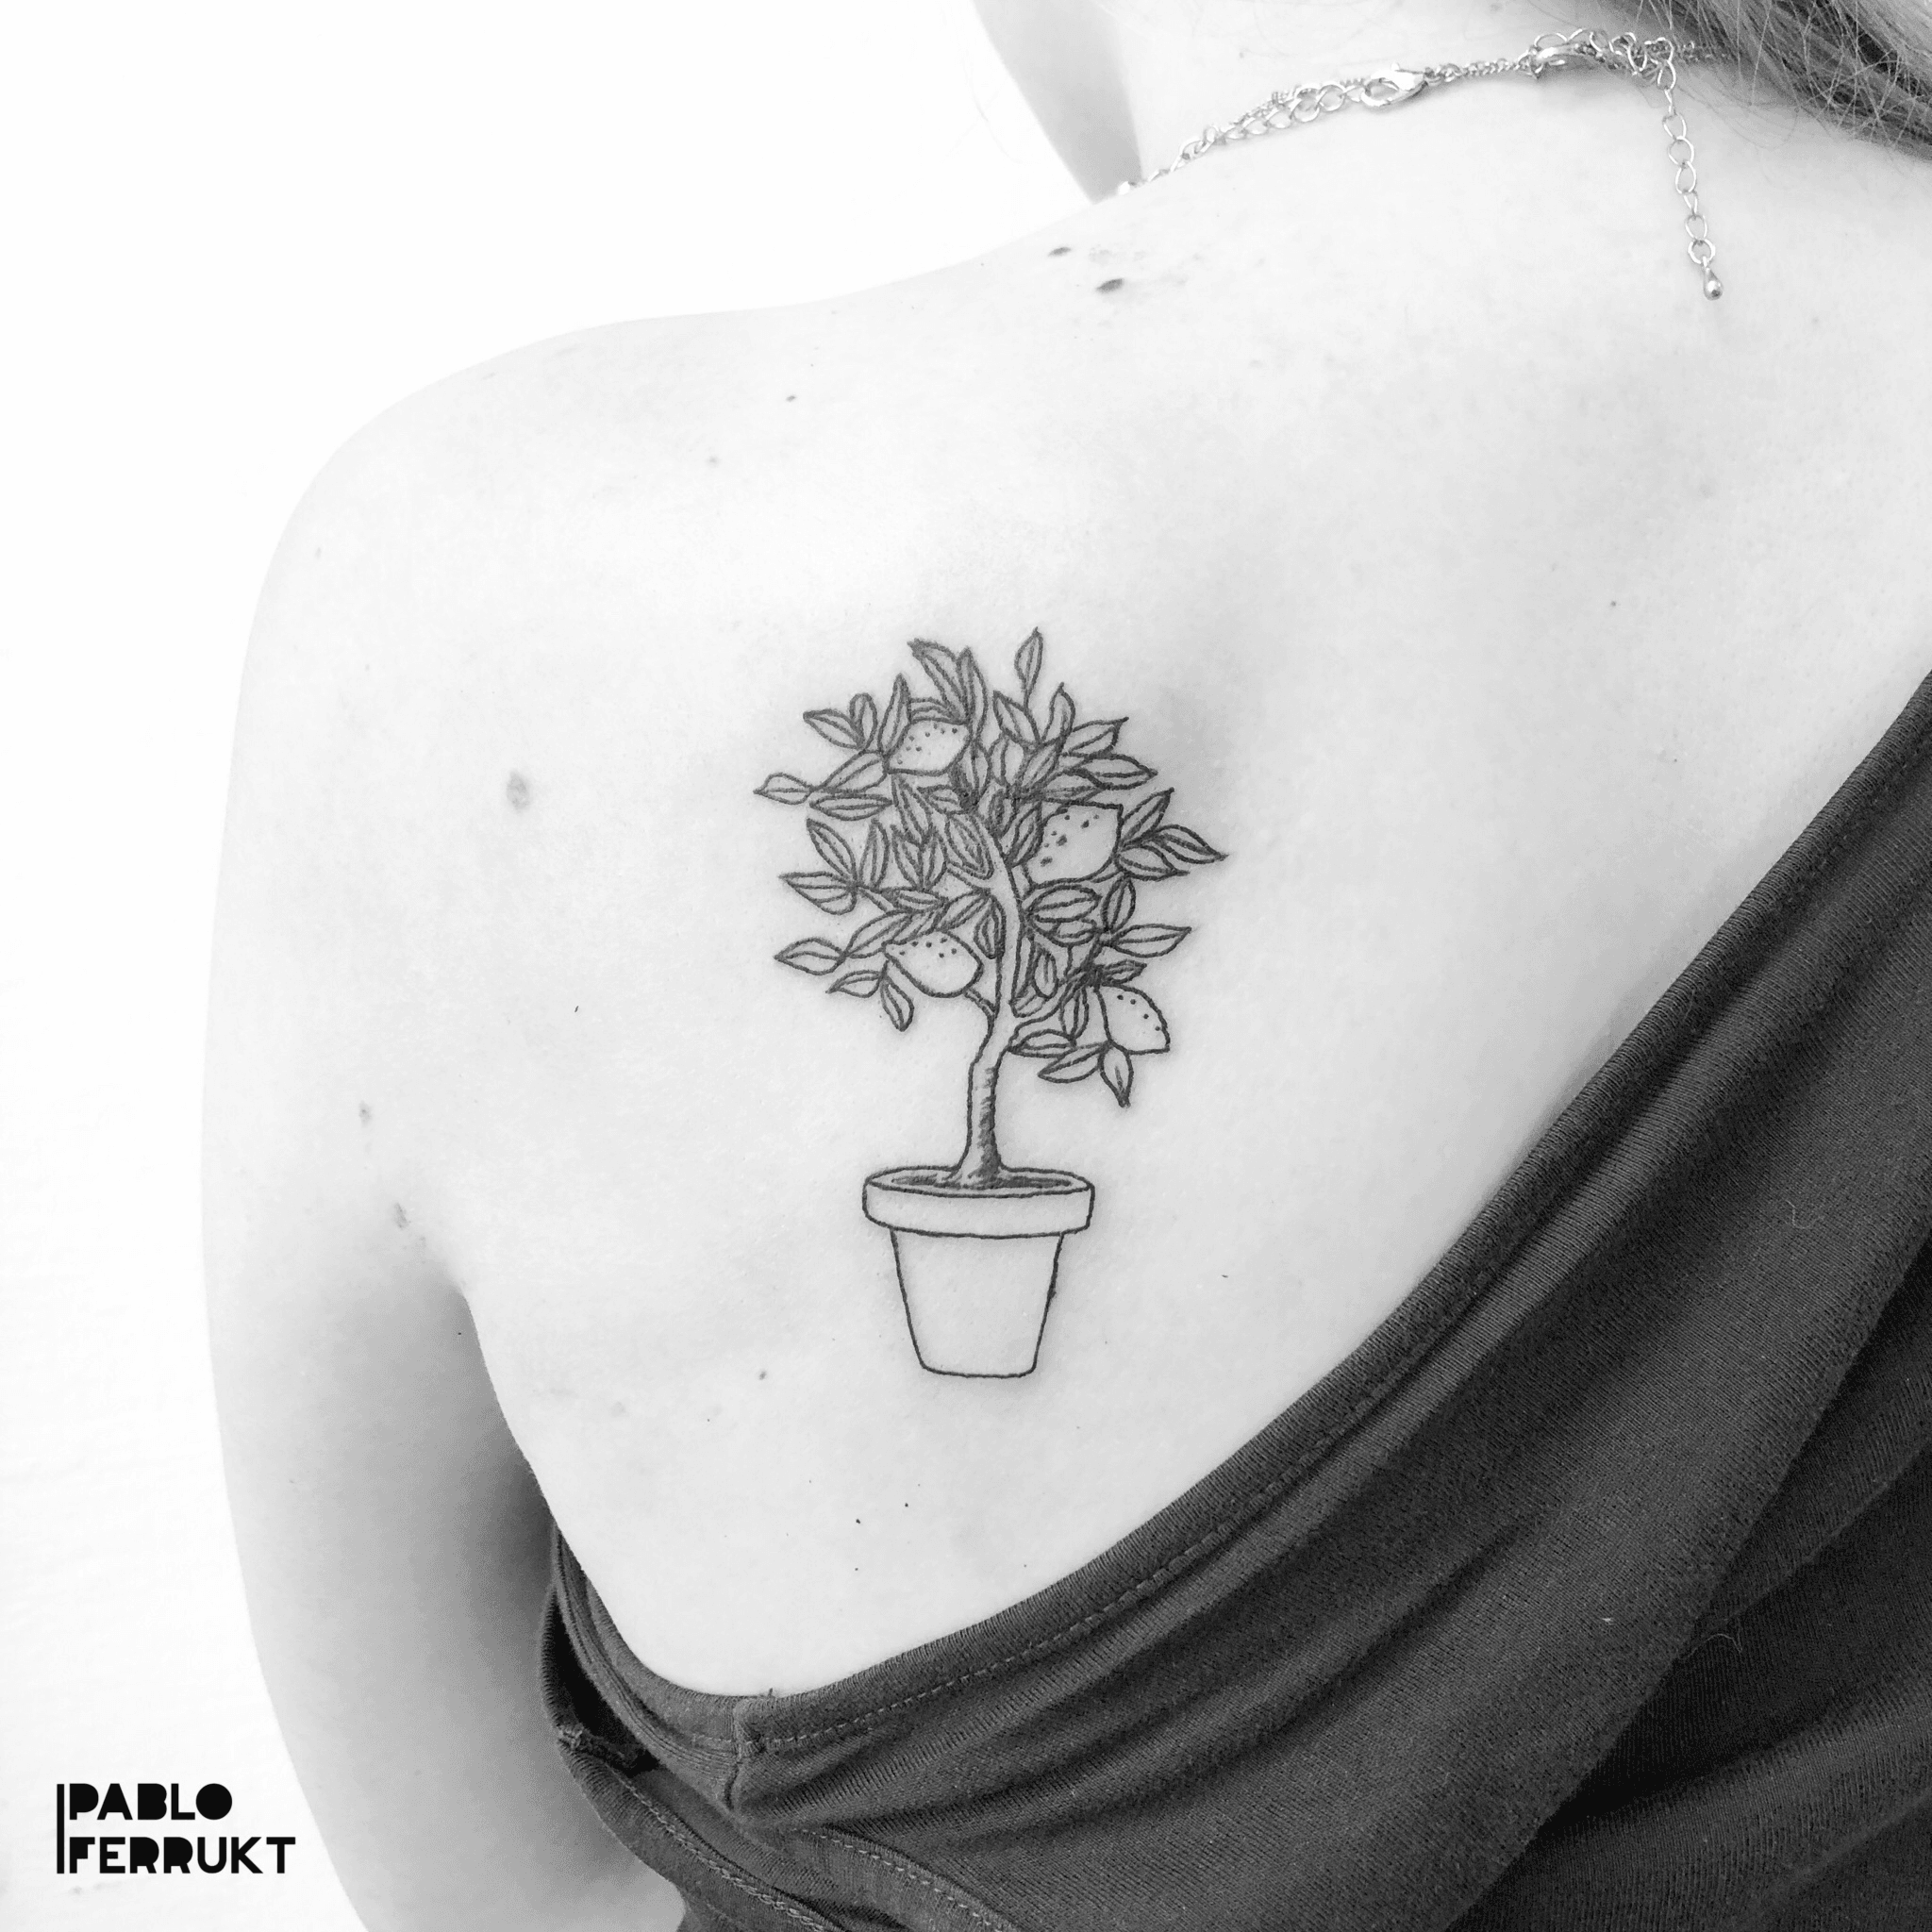 Lemon tree in tattoo style image light little Vector Image